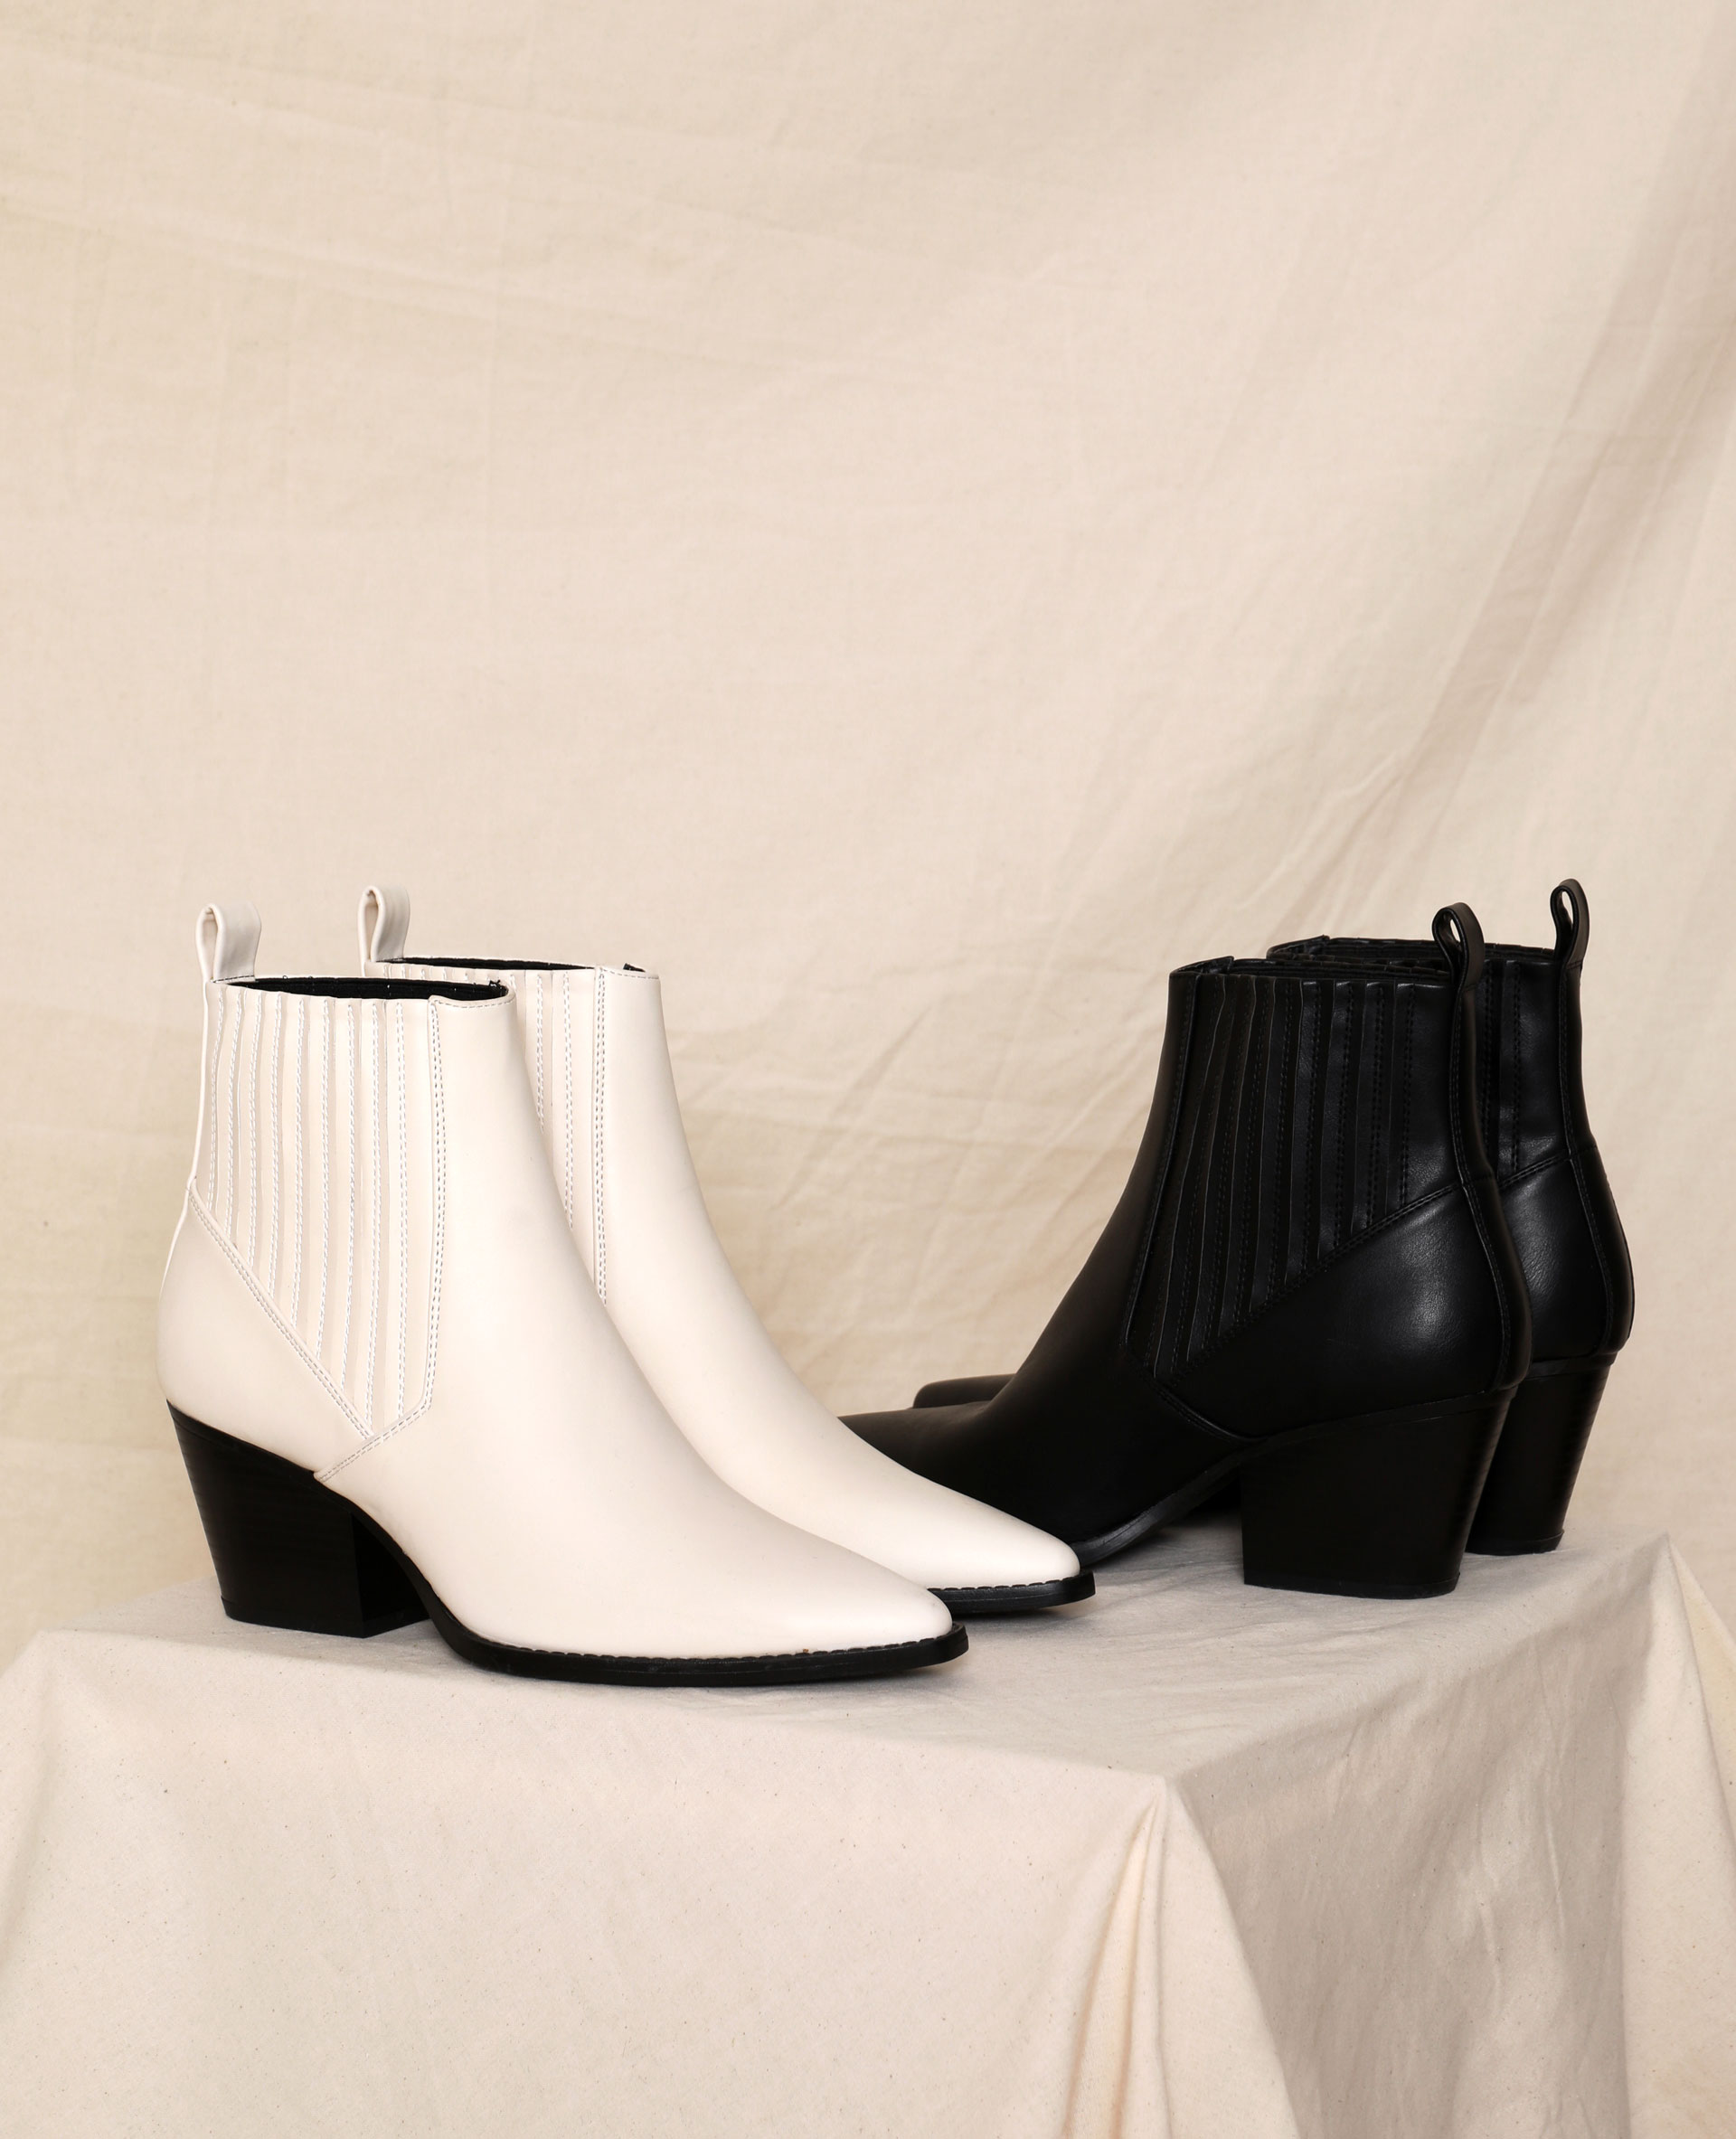 Boots style western blanc - Pimkie